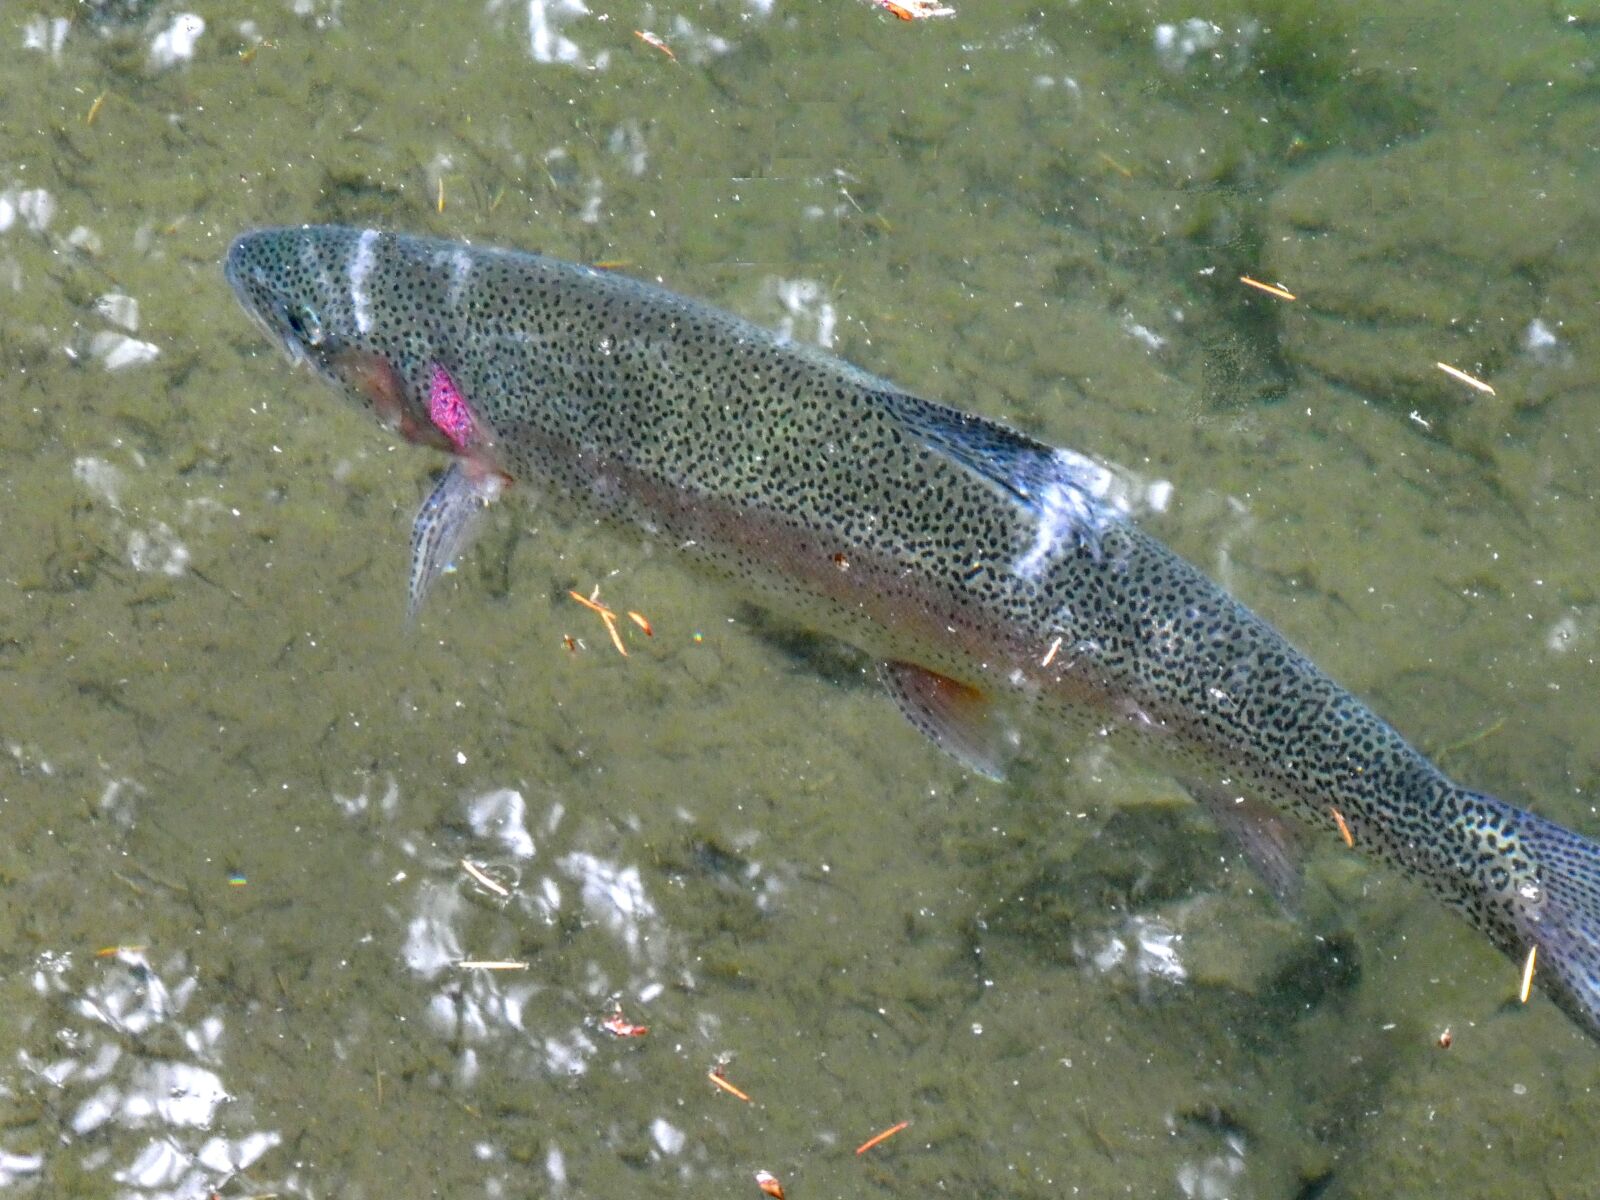 Panasonic DC-ZS70 sample photo. Rainbow trout, trout, fish photography